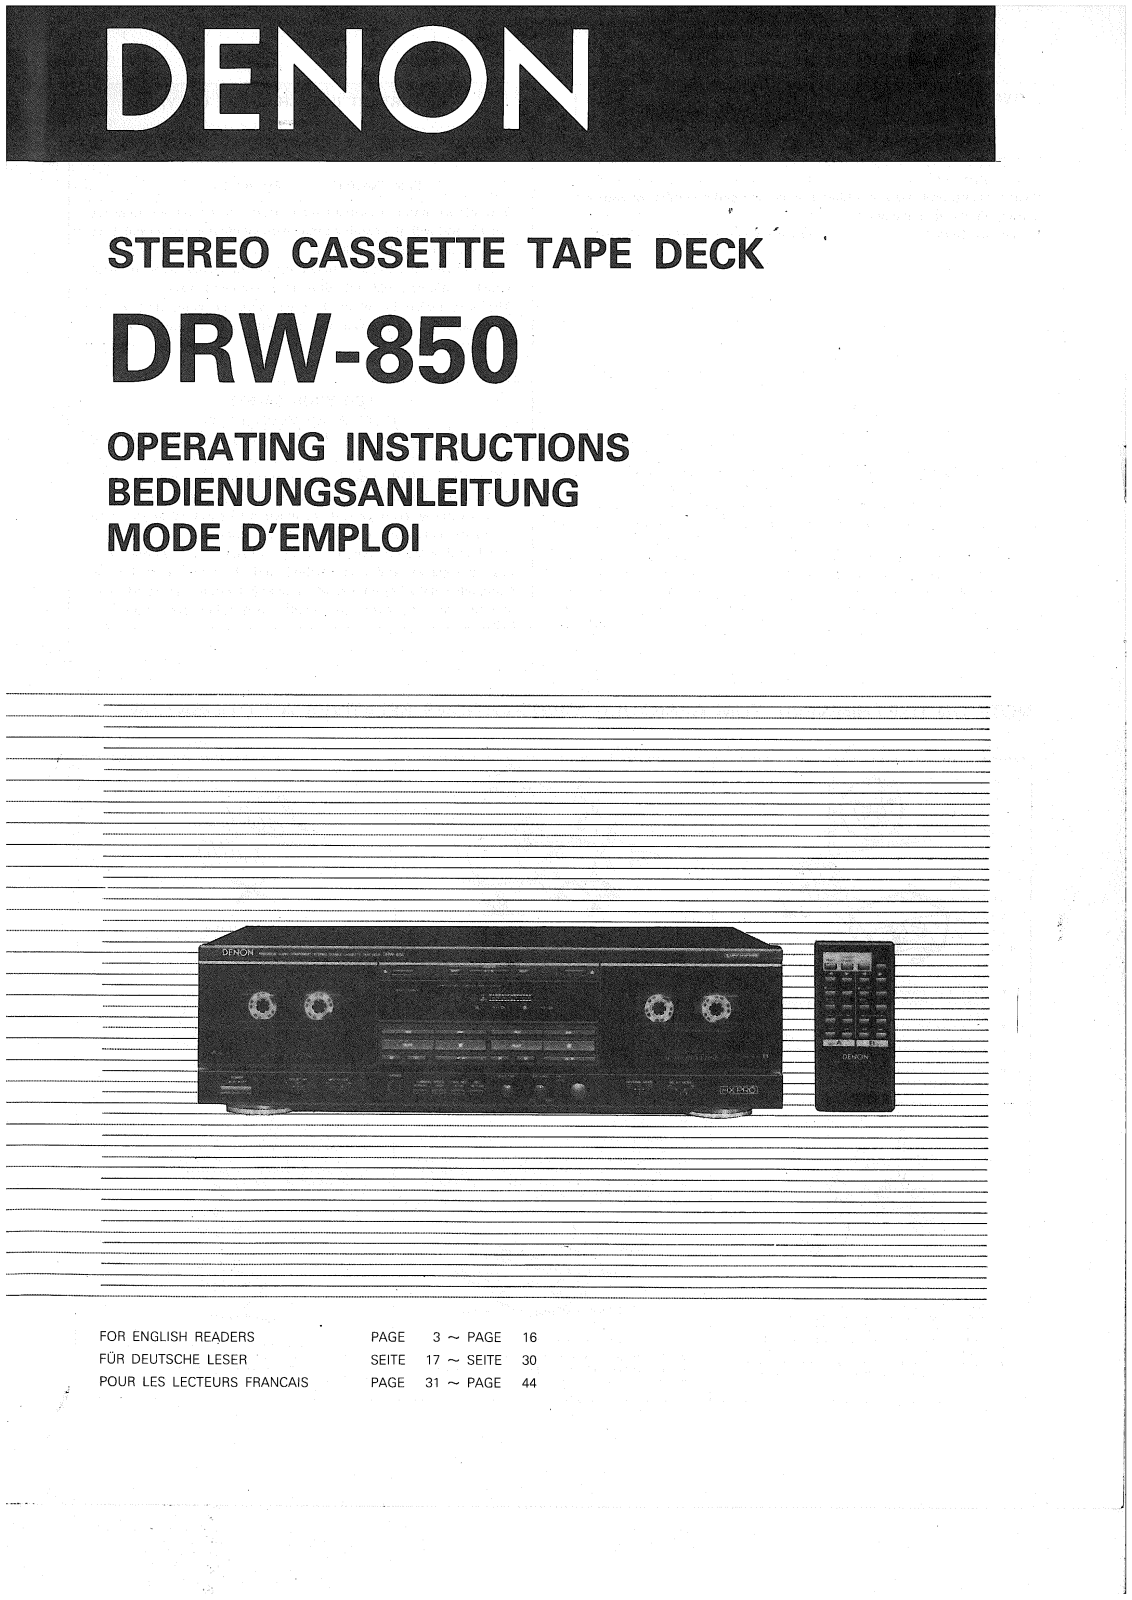 Denon DRW-850 Owner's Manual